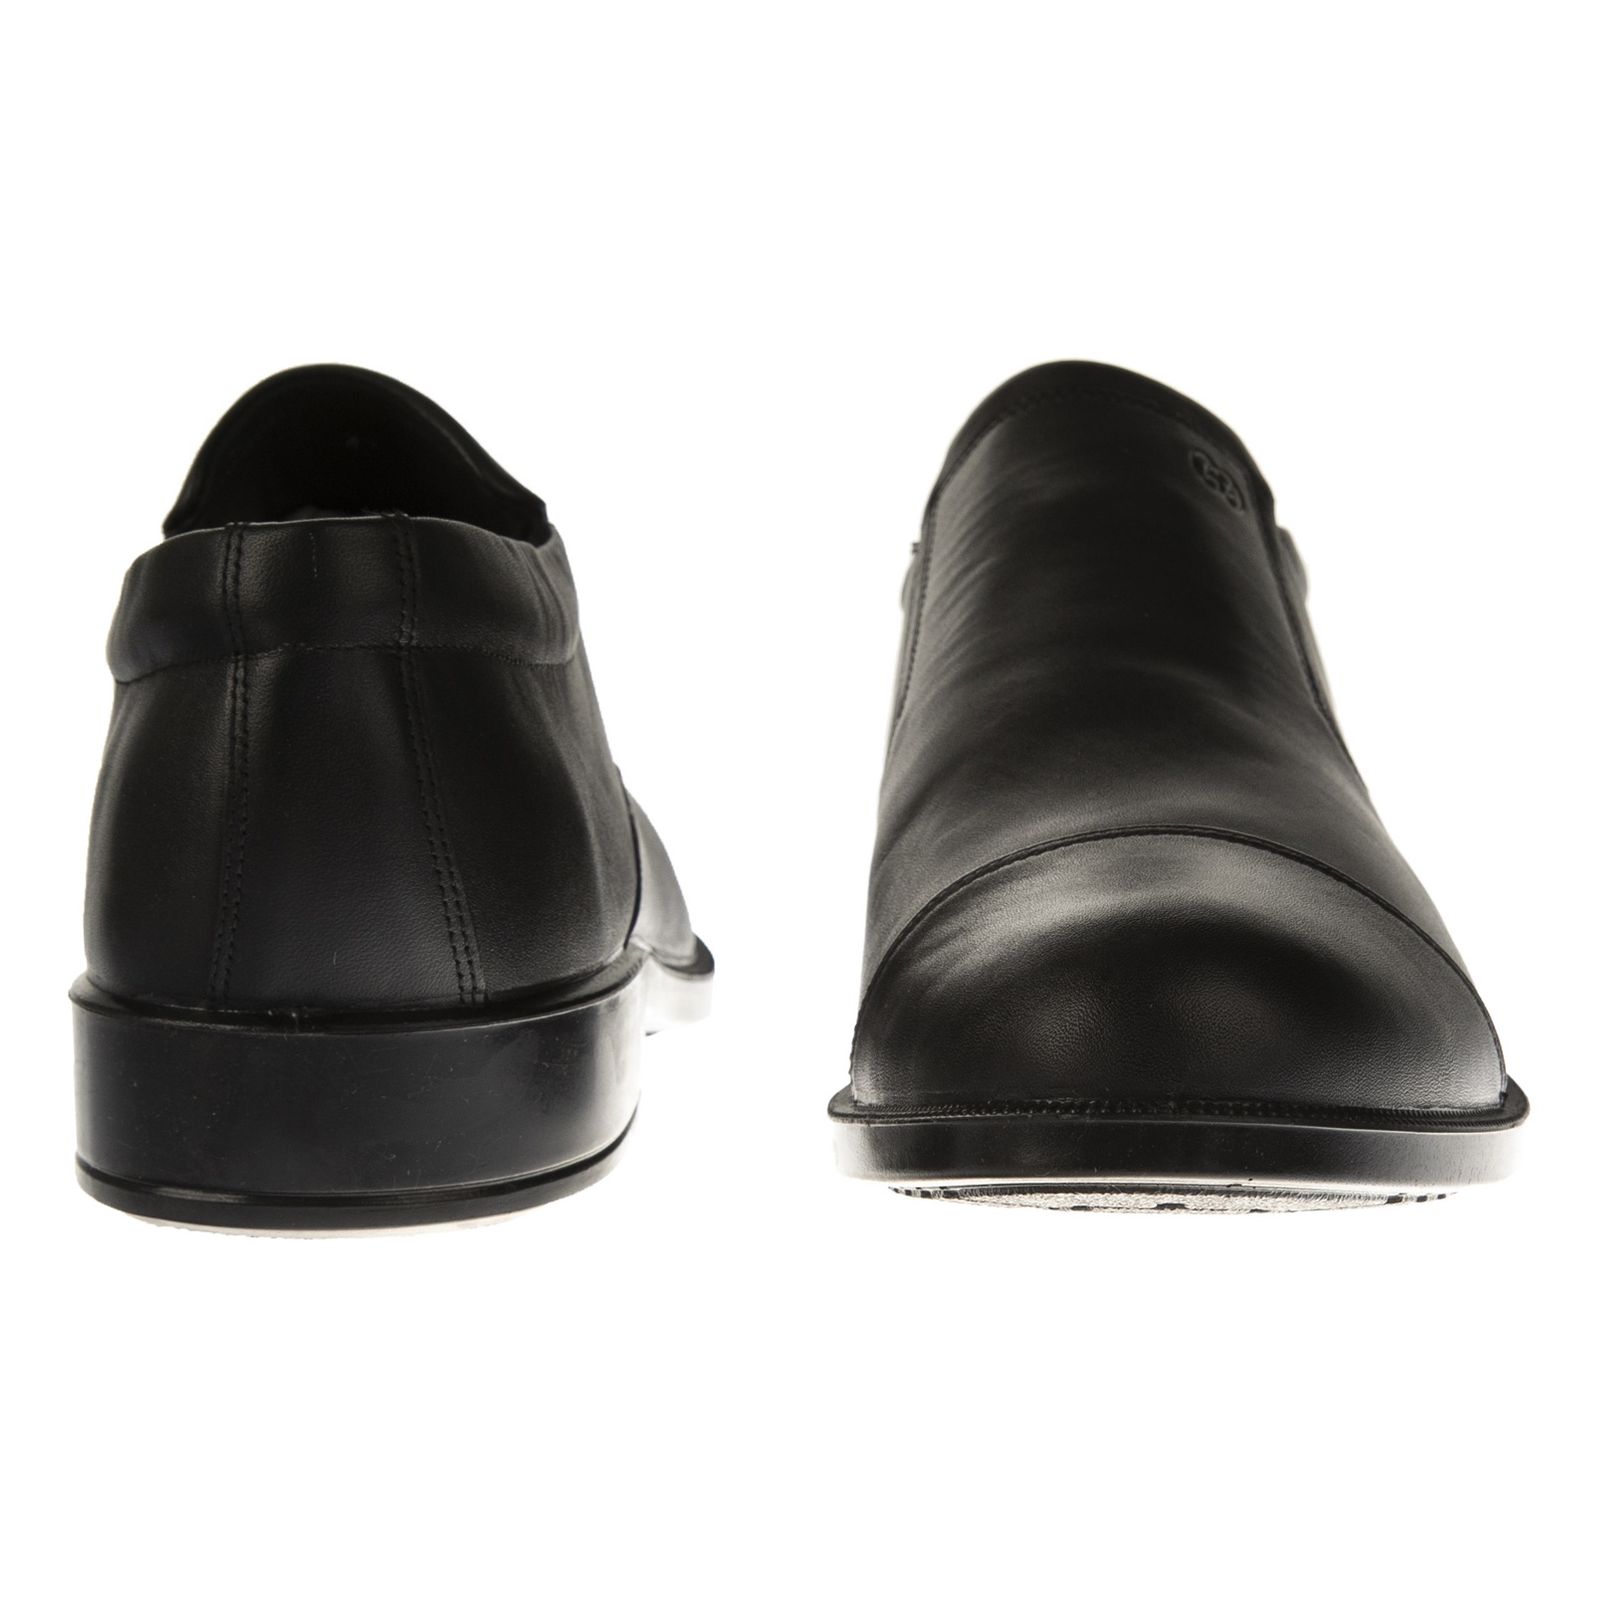 کفش مردانه دنیلی مدل 109110101001